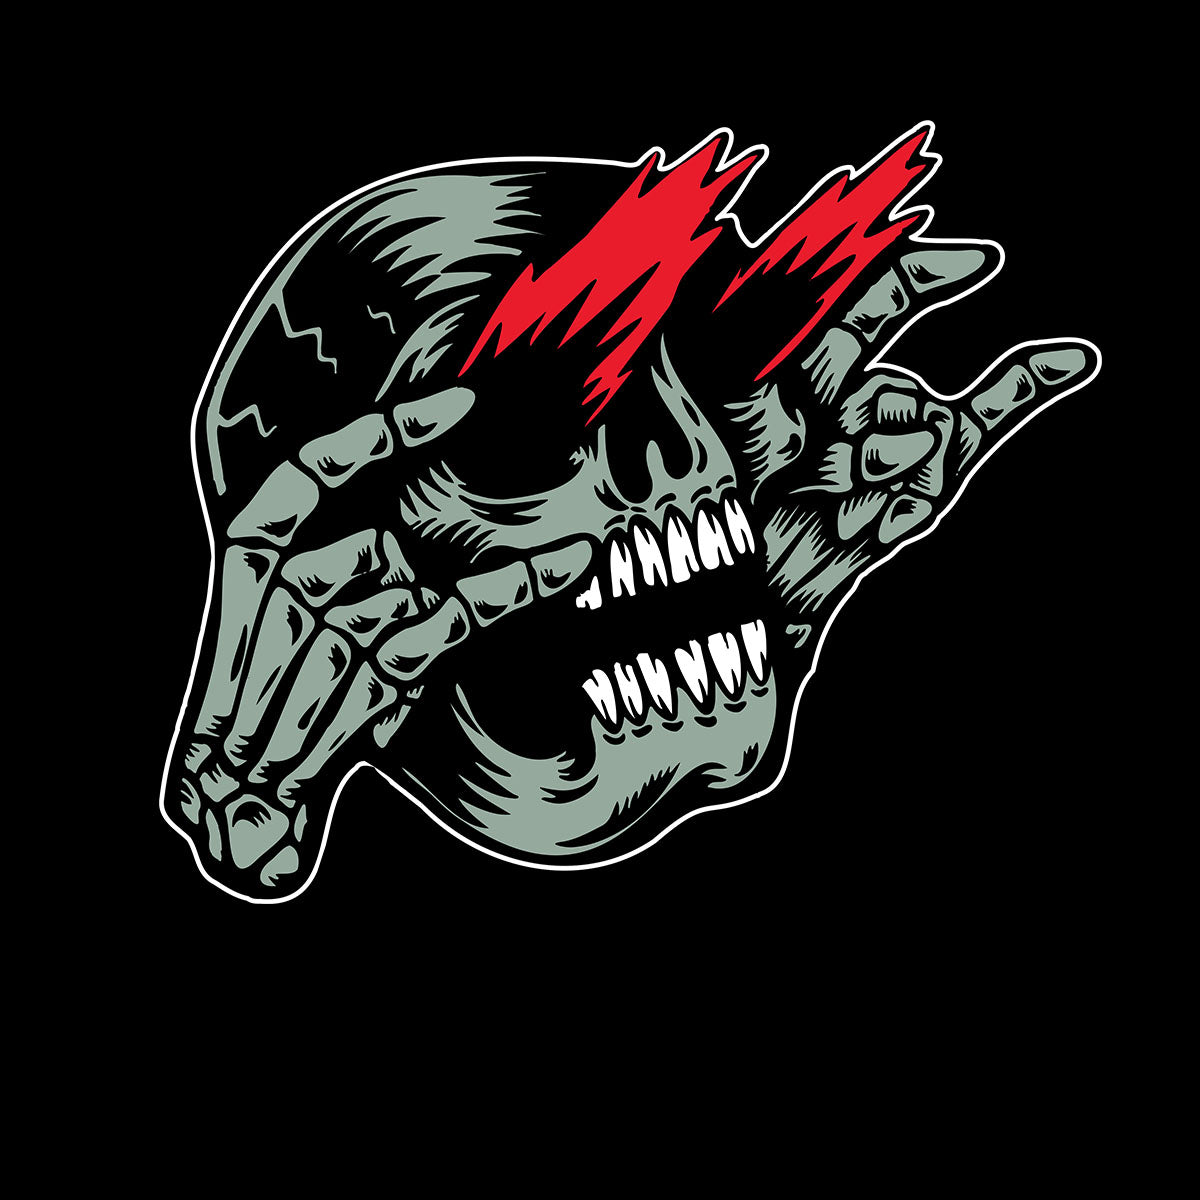 Skull Rockstar T-Shirt Gothic Dark Funny Novelty Metal Men's Unisex T-shirt - Kuzi Tees